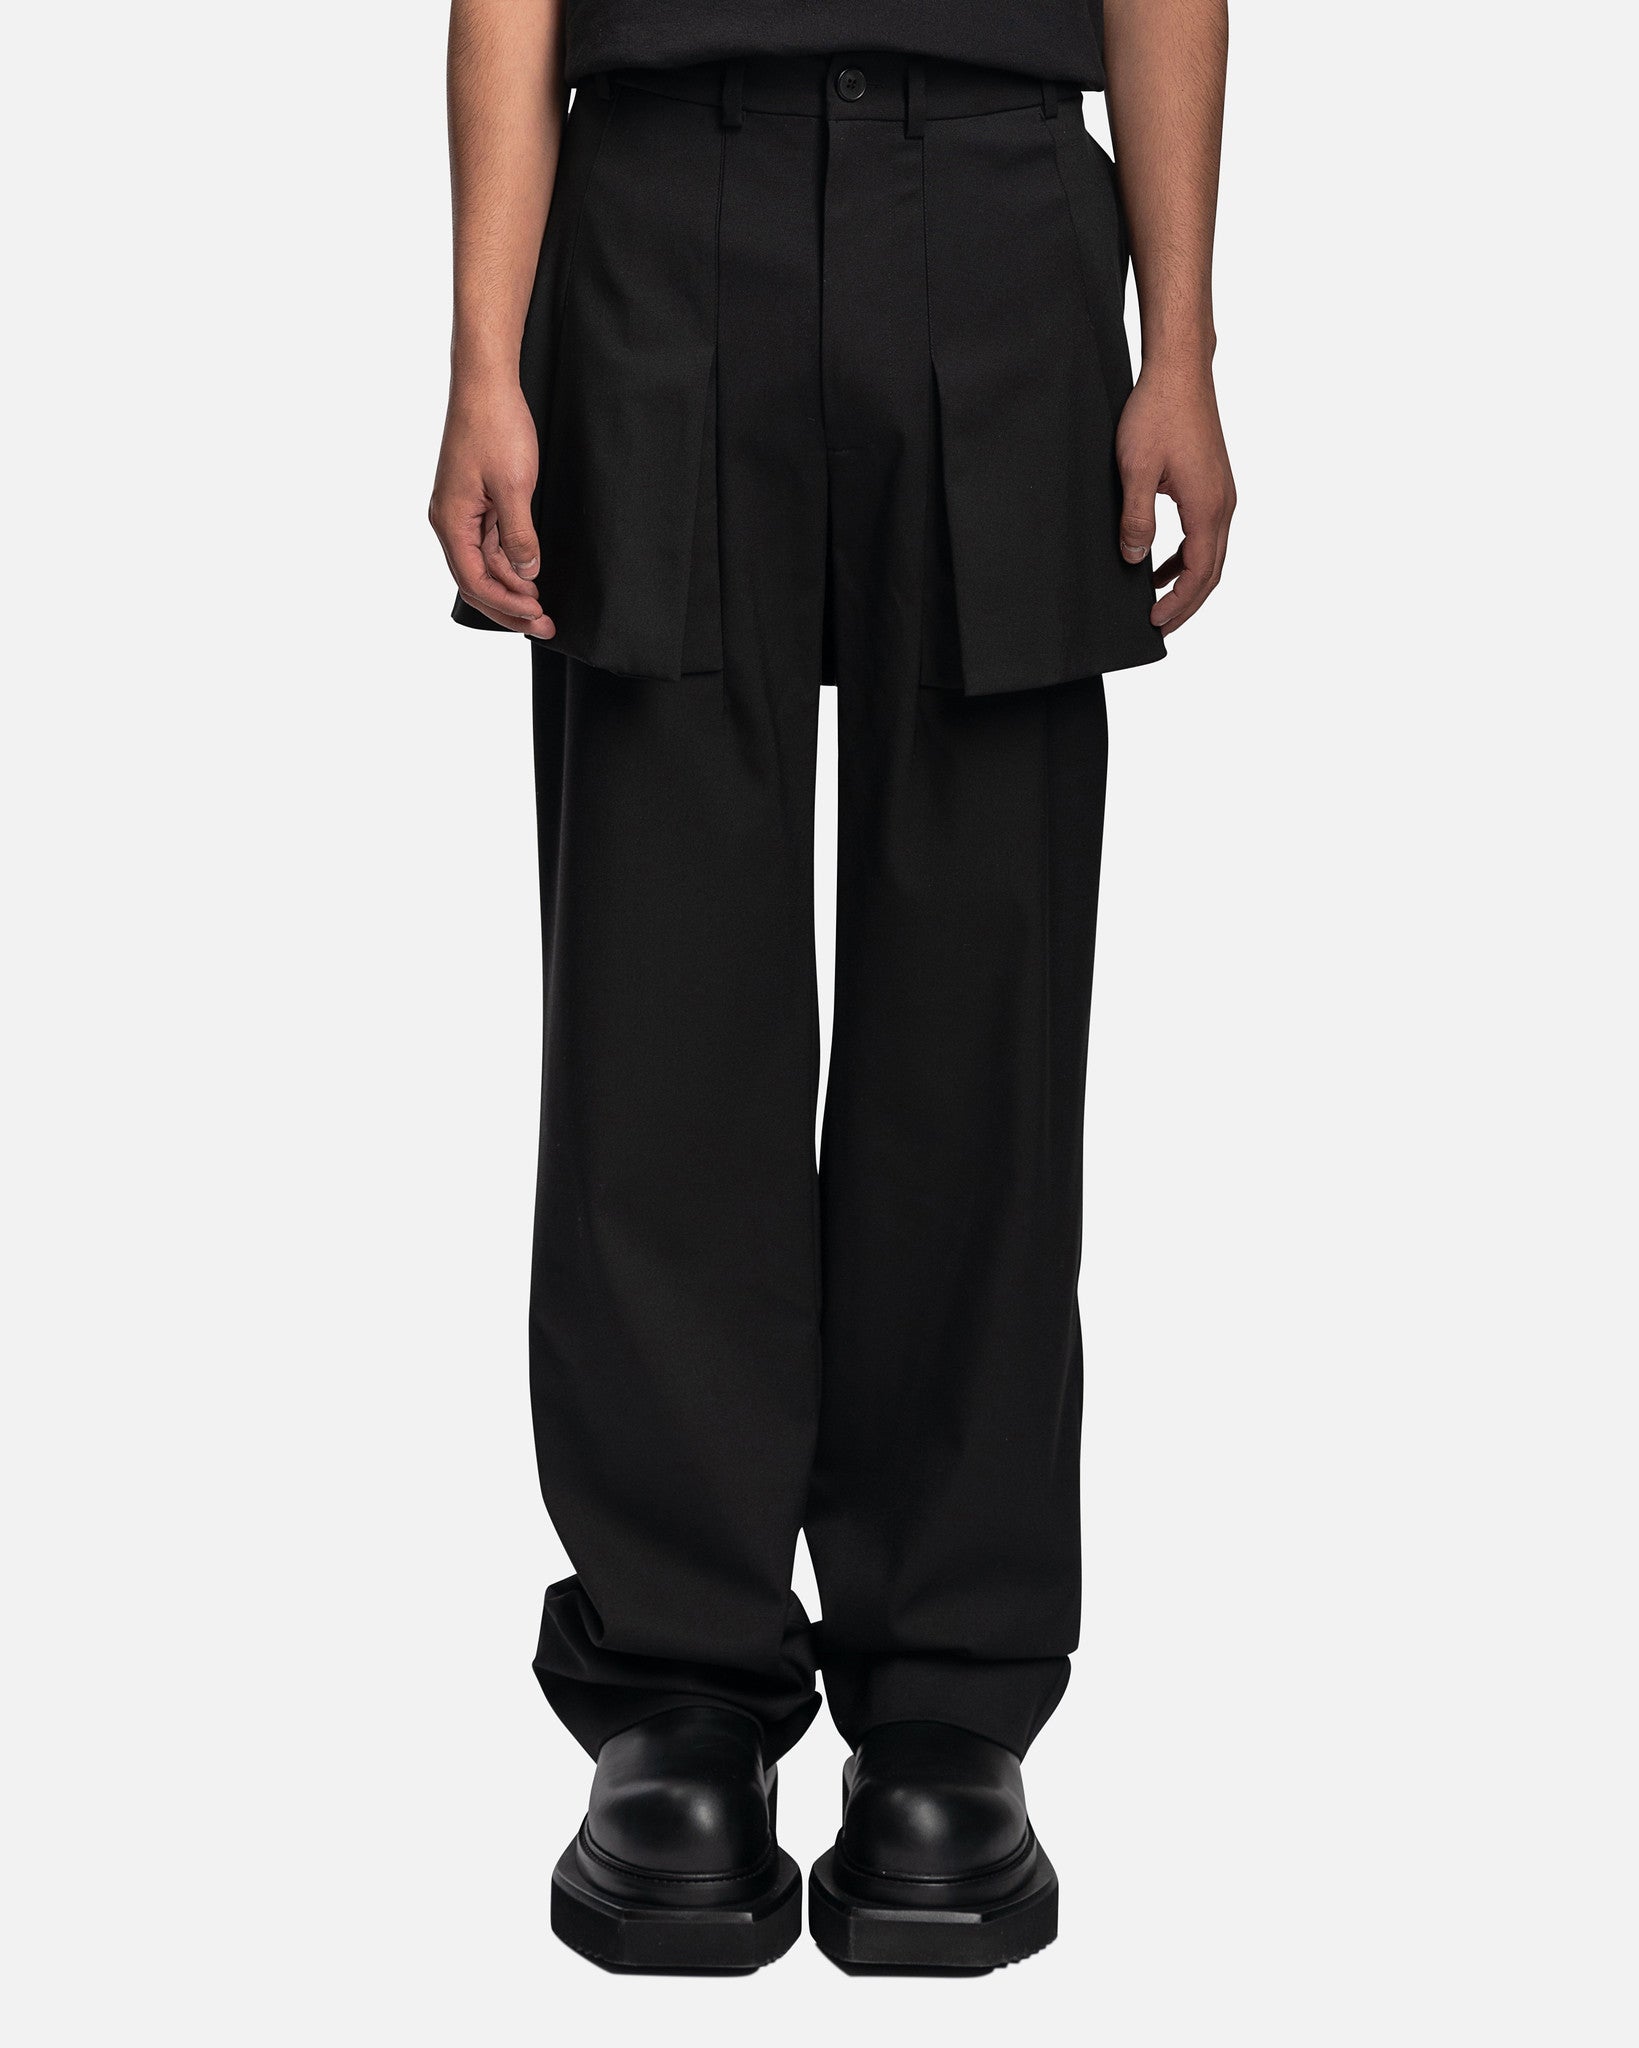 Harpoon Skirt Trousers in Aubergine Black – SVRN